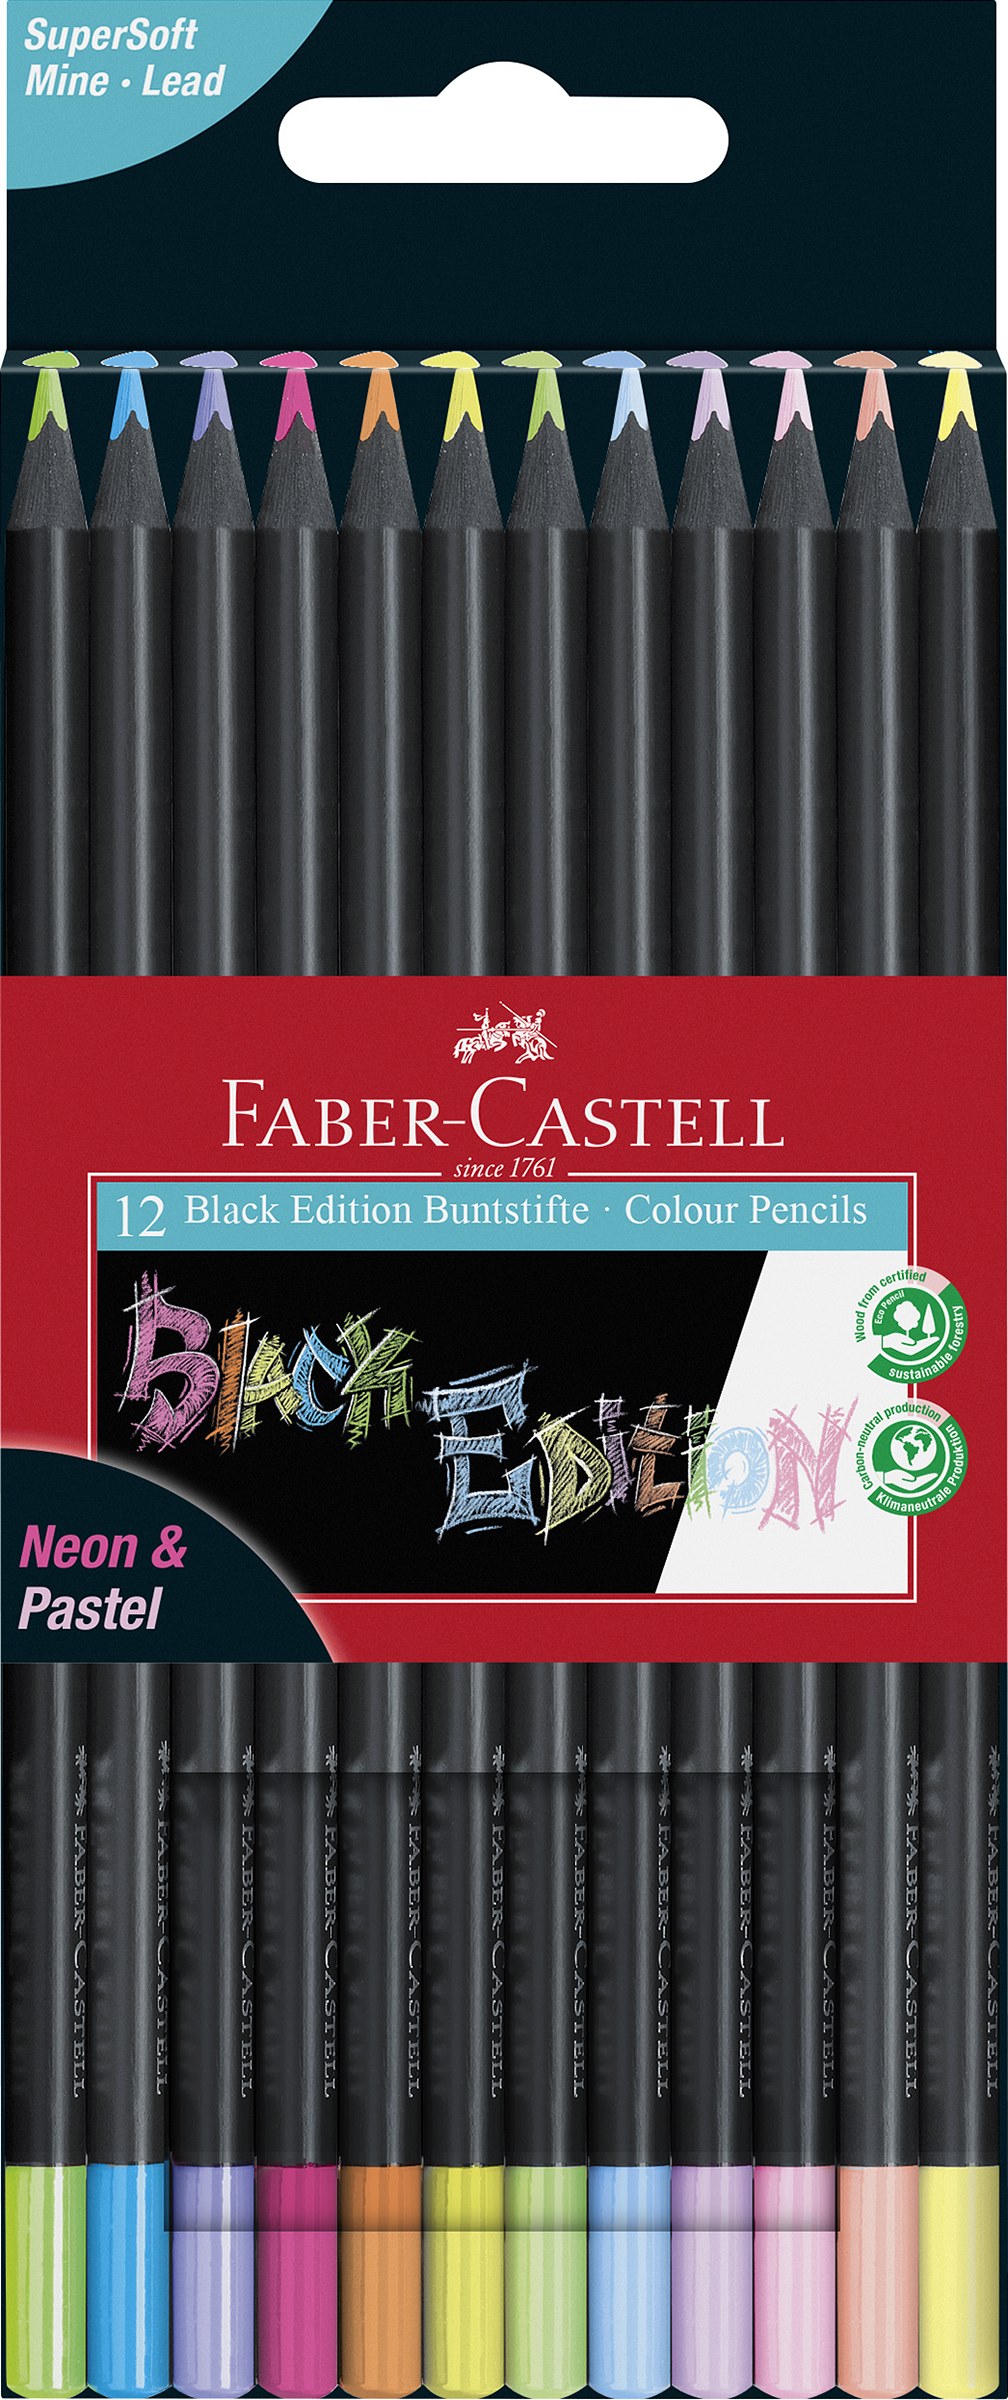 Faber-Castell_Black Edition Neon + Pastel_12er Etui_ EUR 6,00